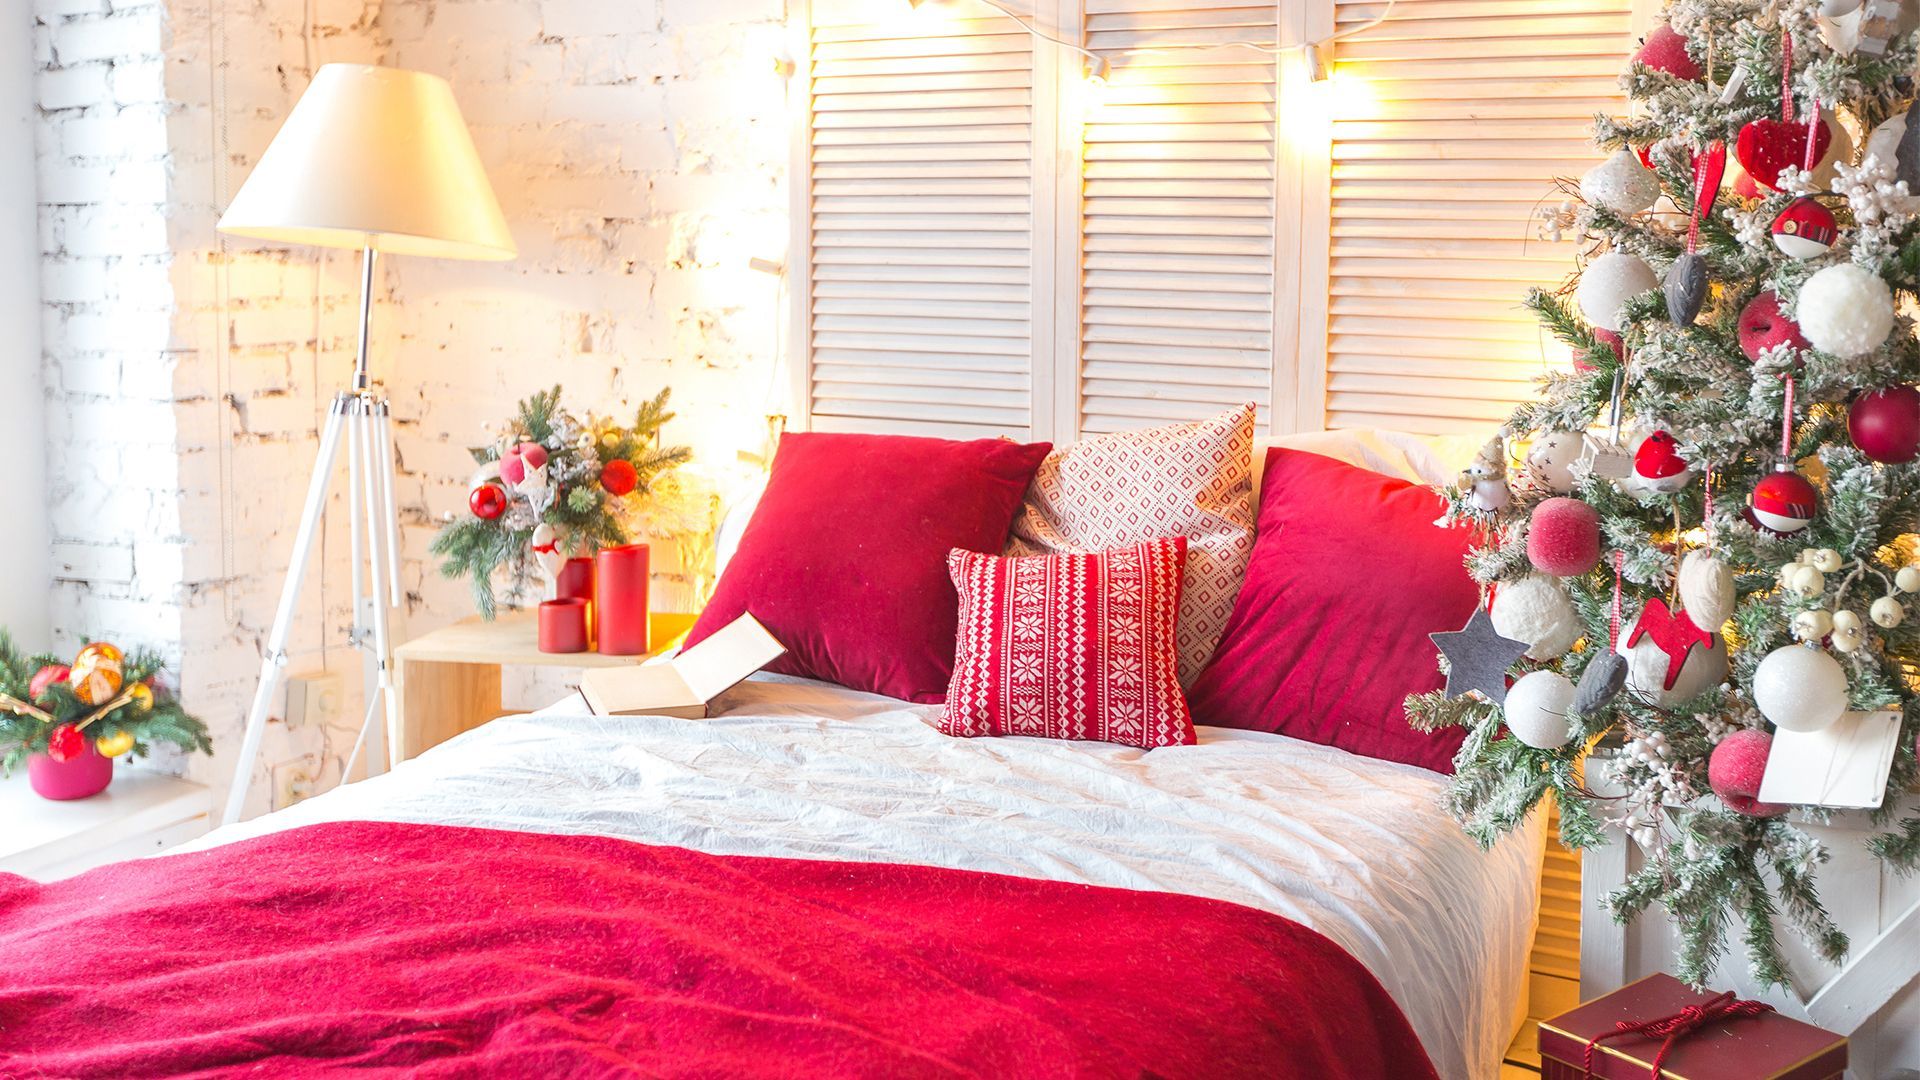 stortbui fusie Goodwill 7 kerst ideeën: Zo breng je jouw slaapkamer in kerstsferen